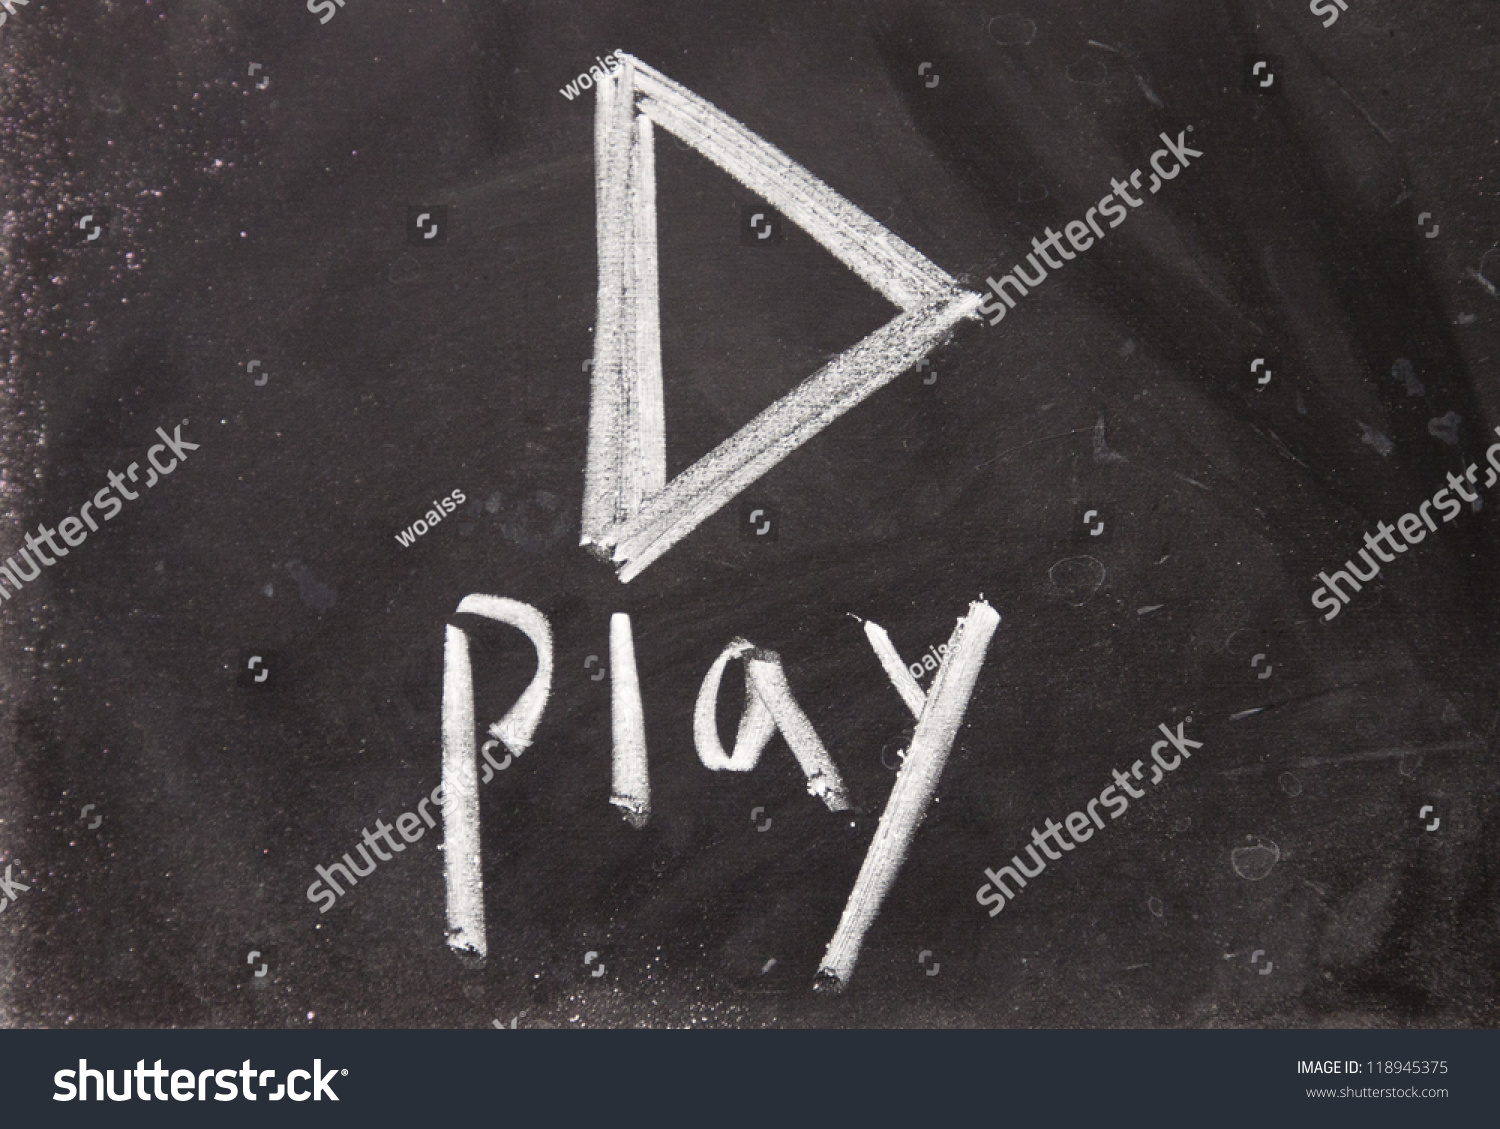 play sign drawn with chalk on blackboard #118945375